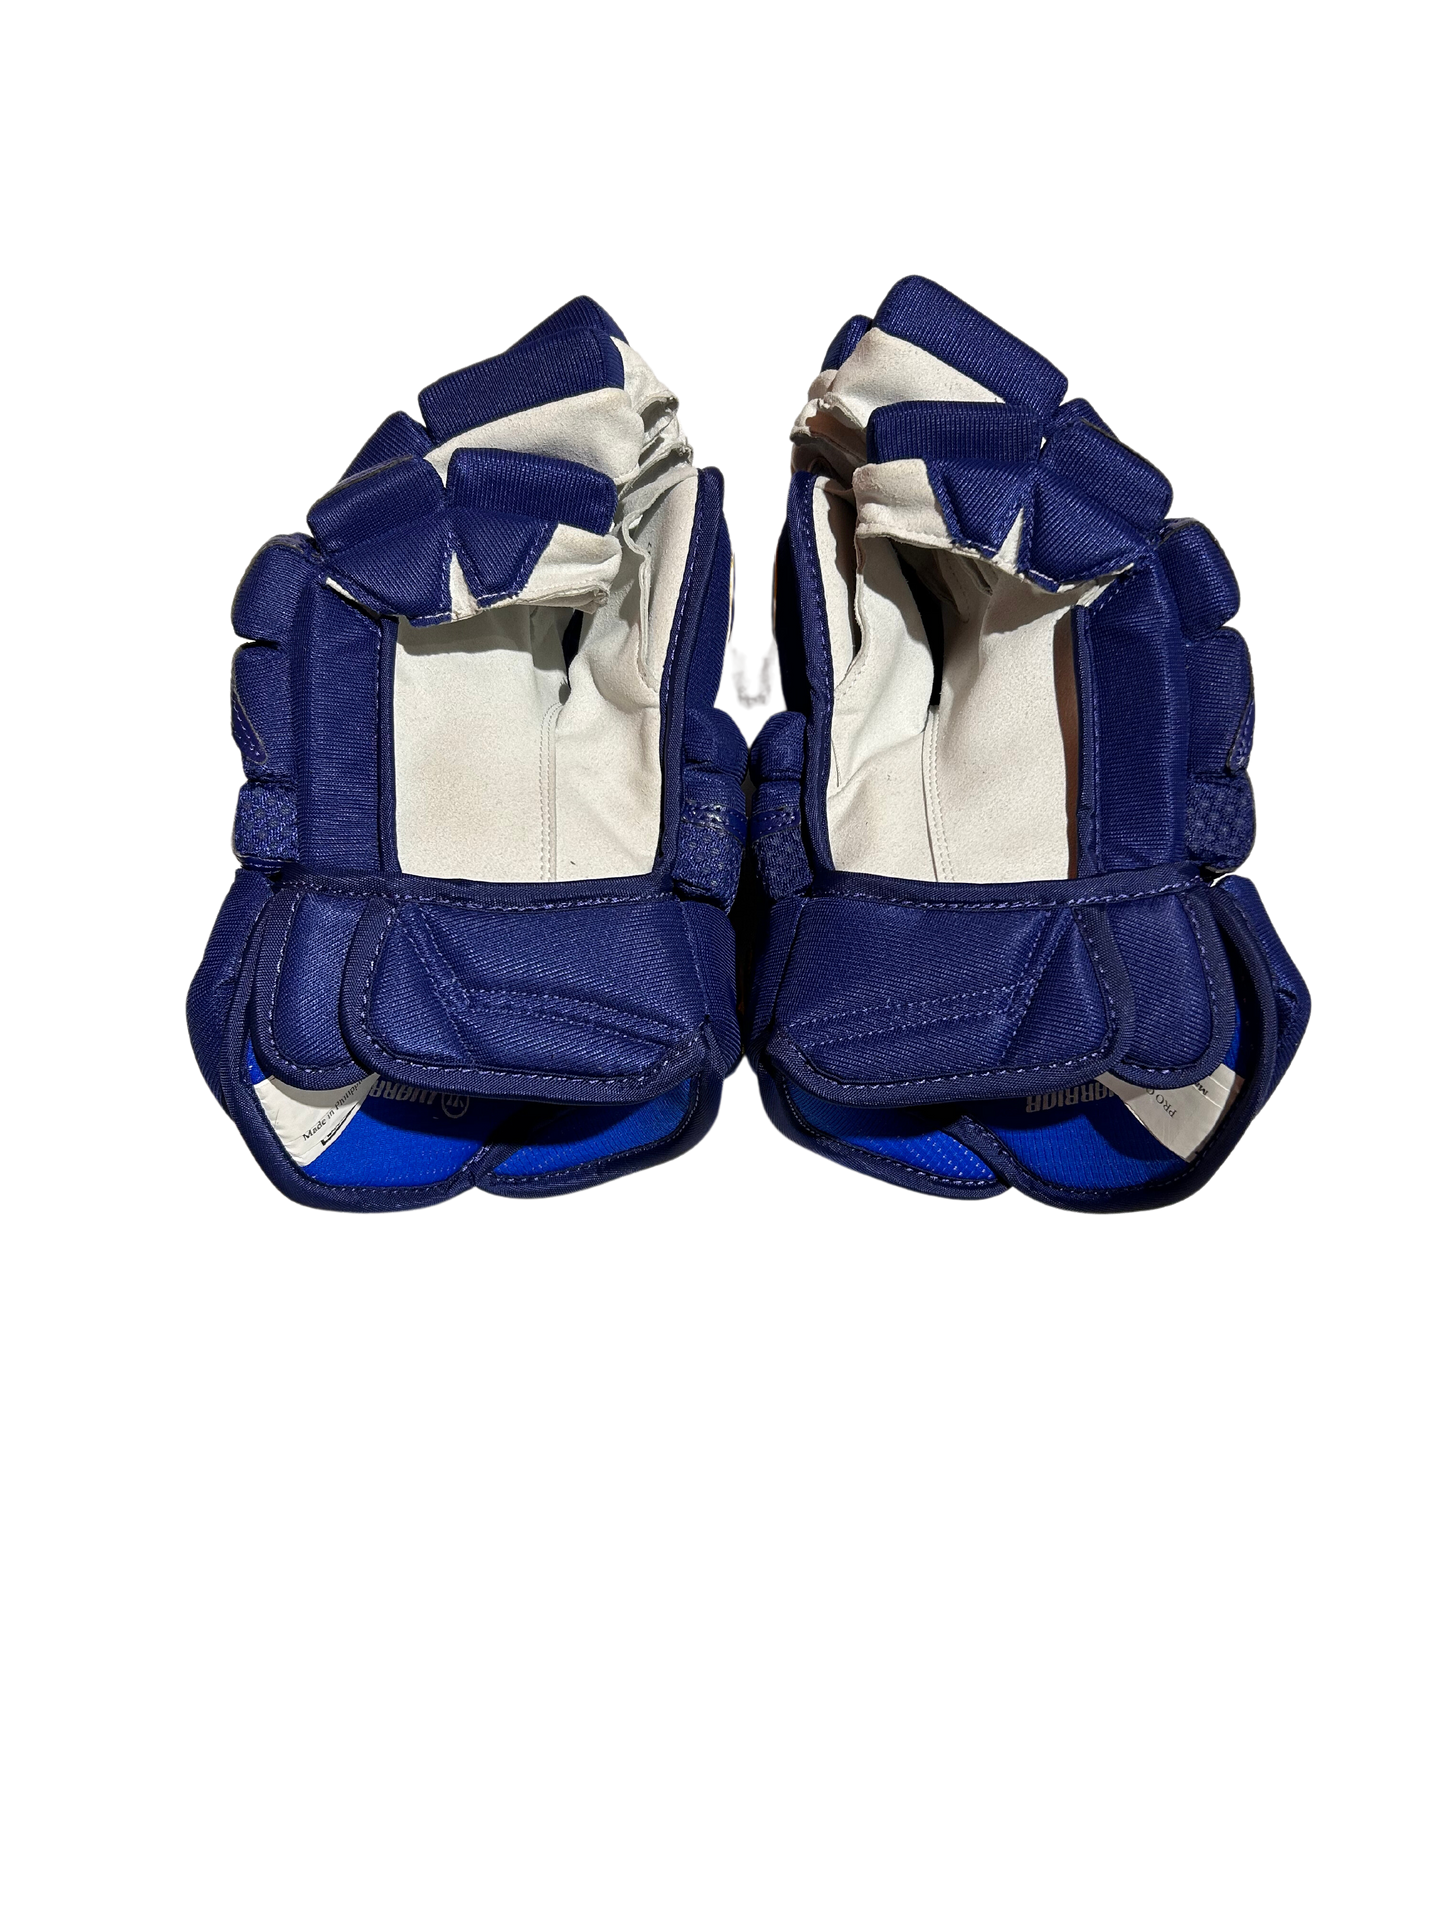 New Navy & Gold Team Sweden 15" Warrior QR1 Pro Gloves (Multiple Options)